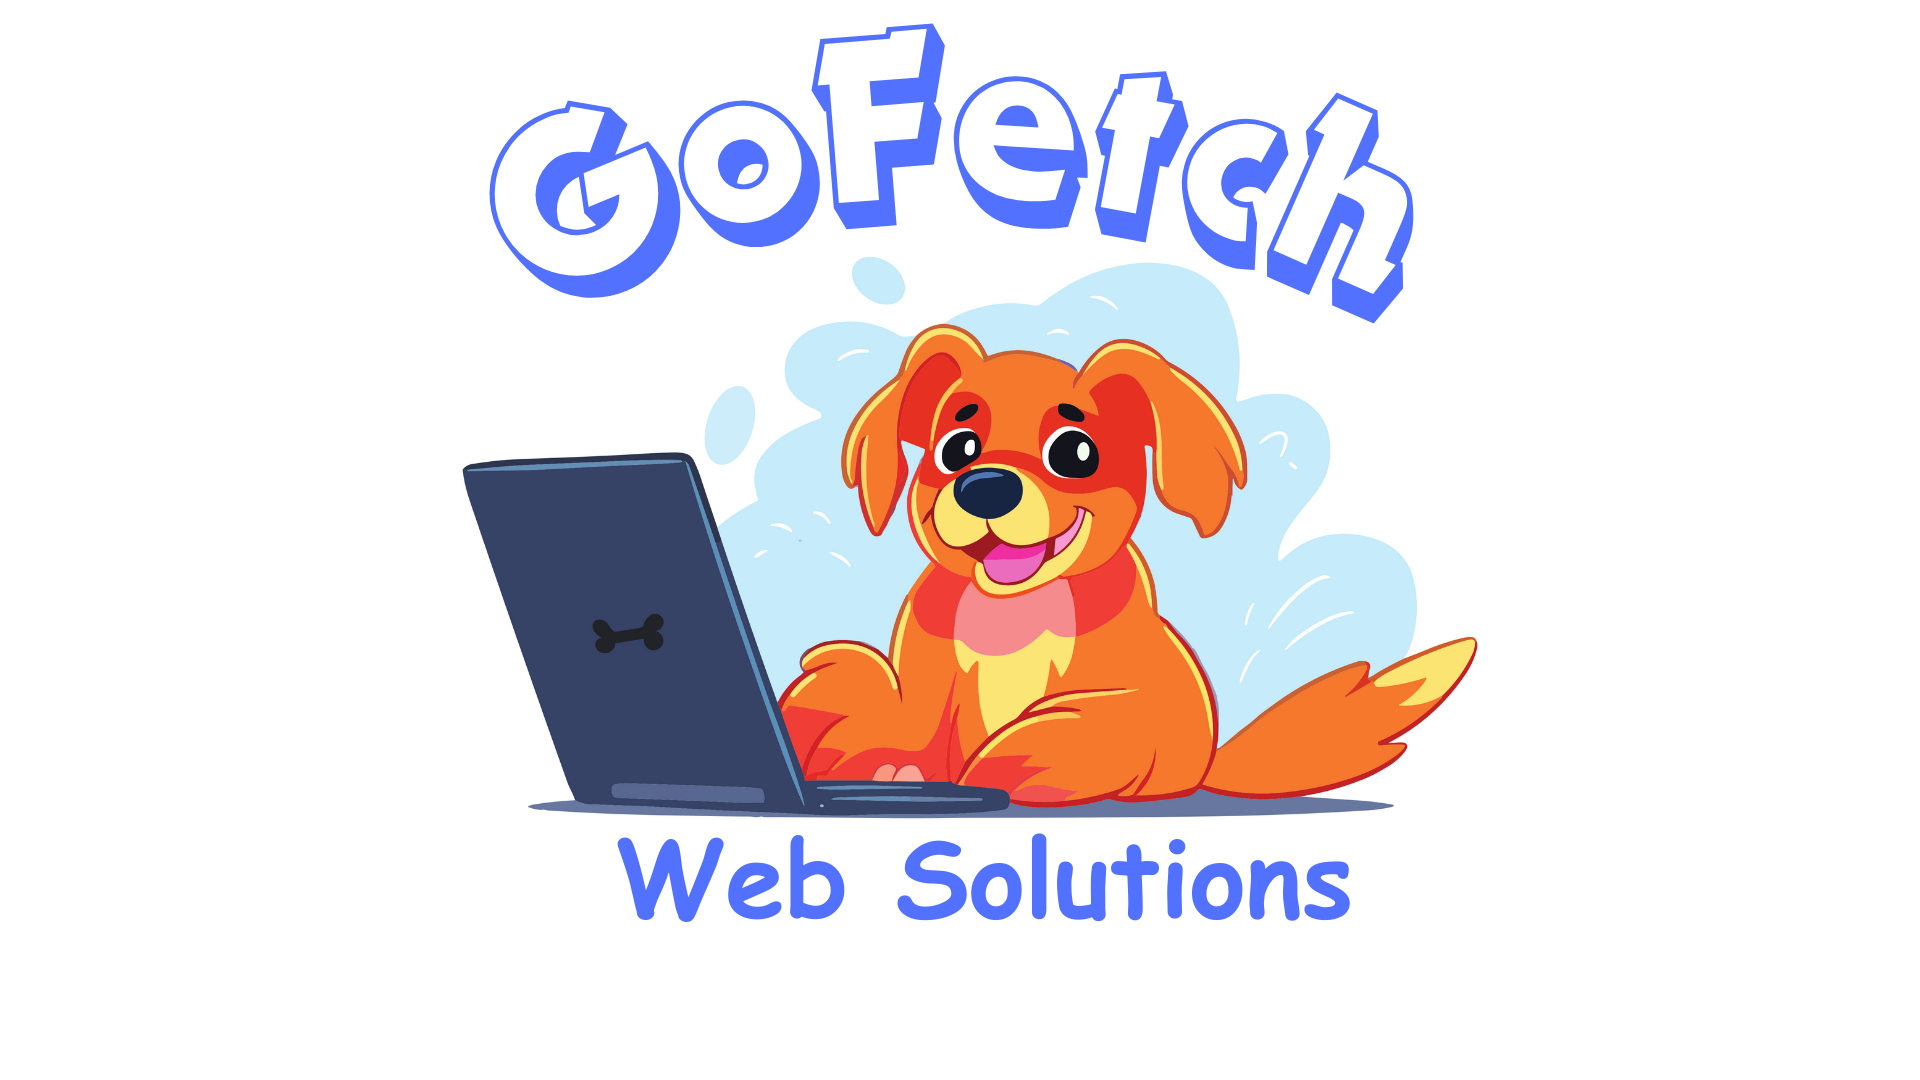 Go Fetch Web Solutions